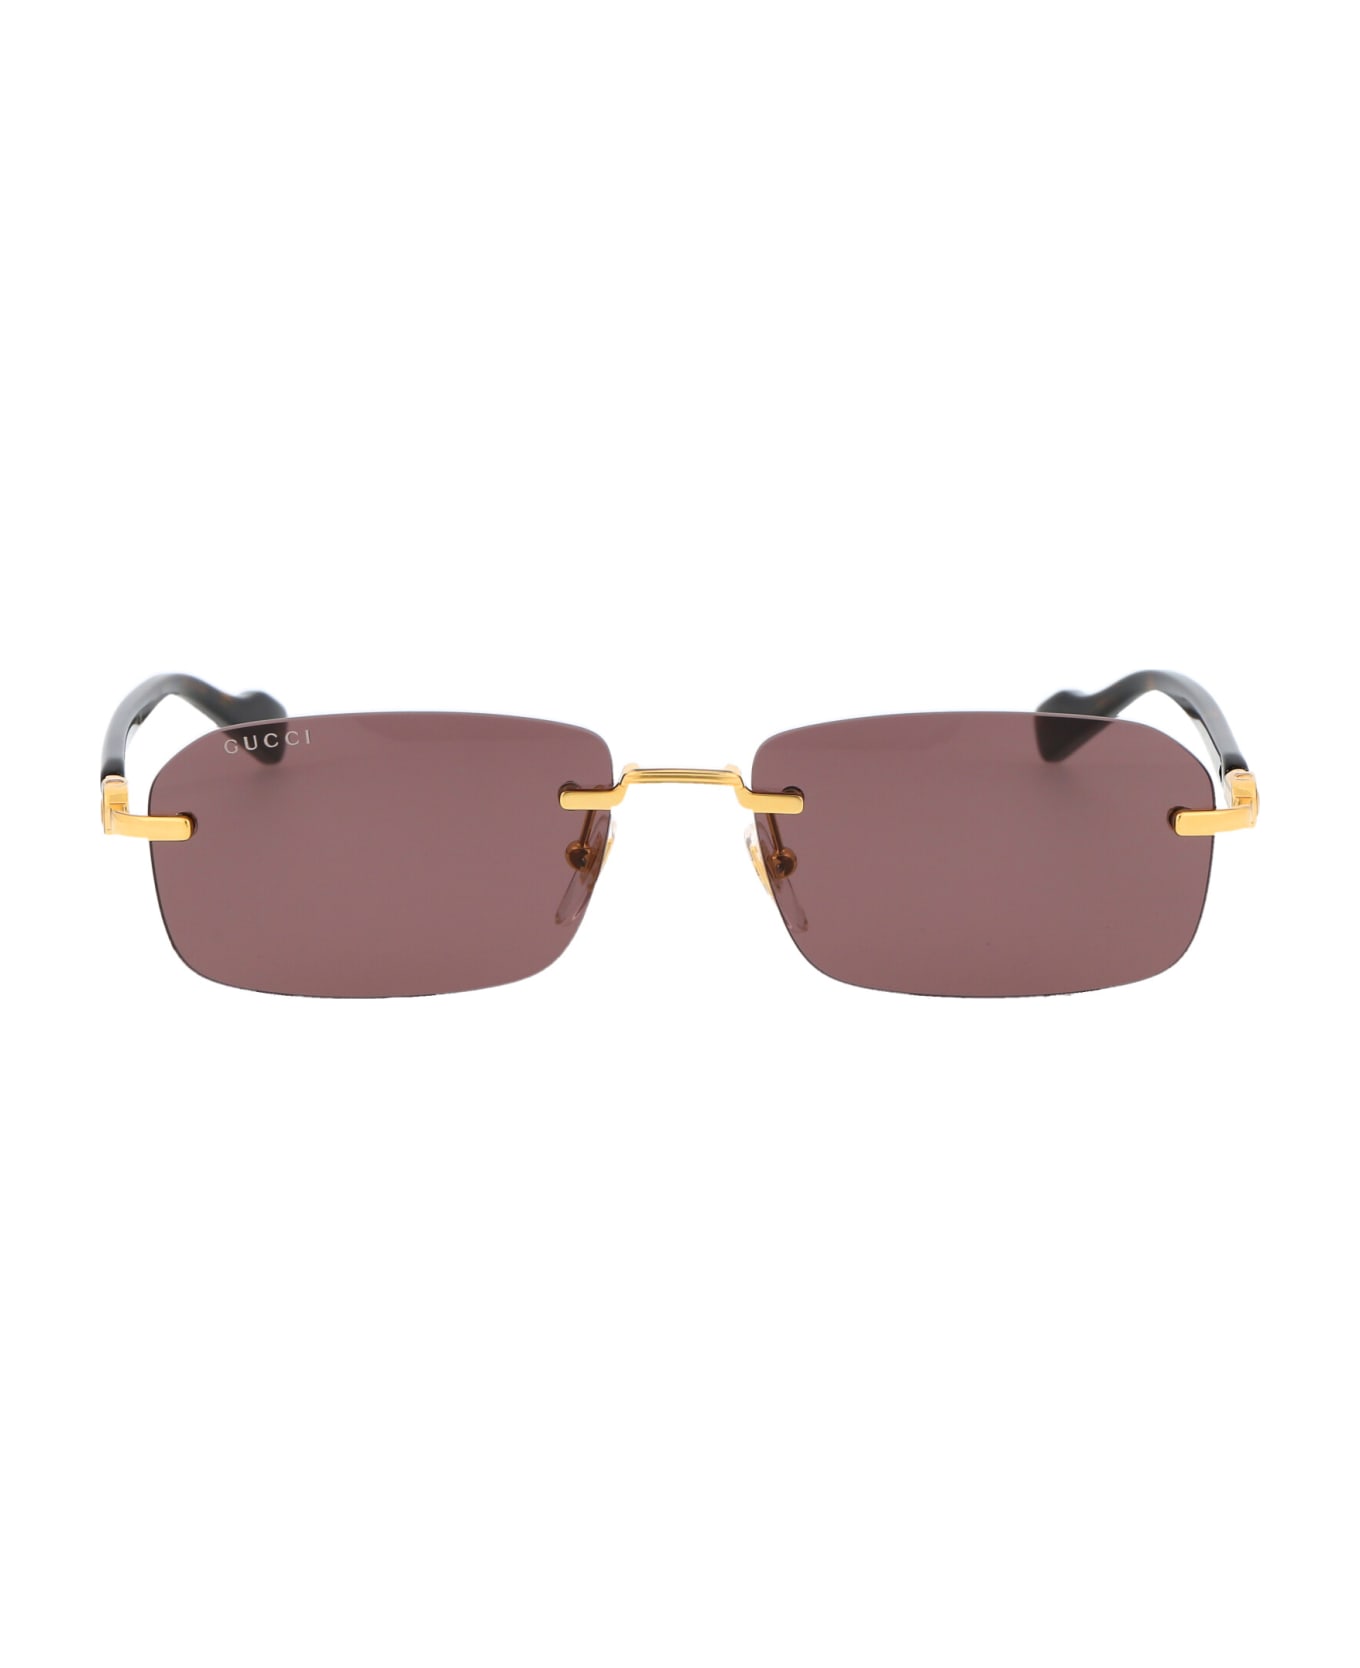 Gucci Eyewear Gg1221s Sunglasses - 002 GOLD HAVANA BROWN